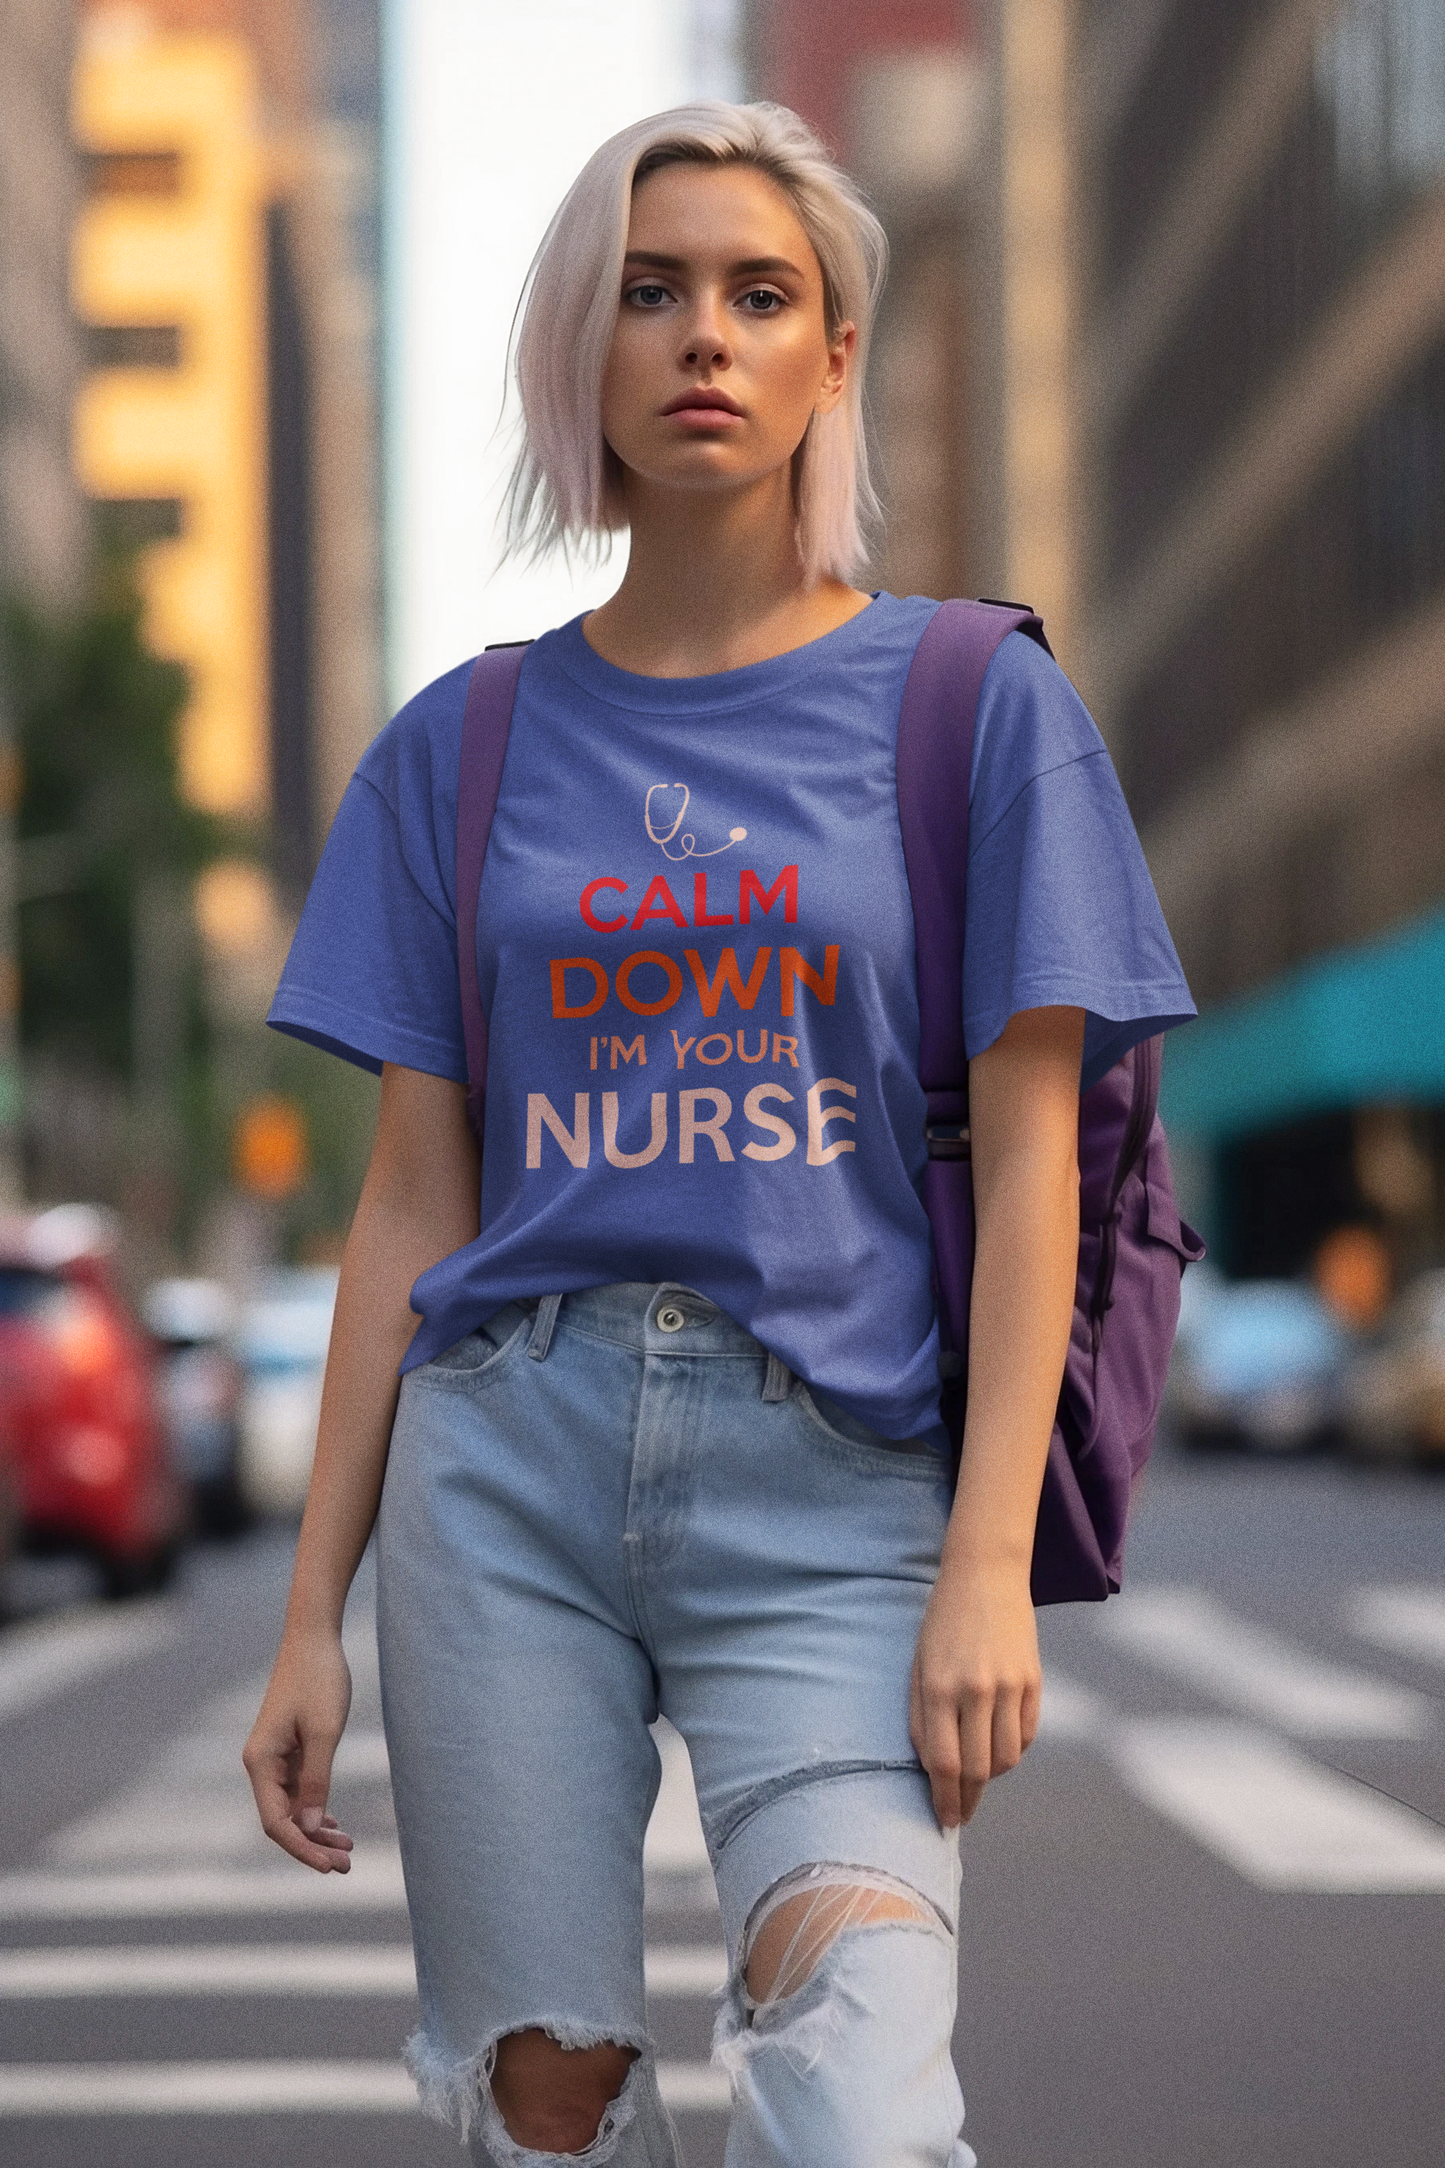 Calm Down I'm Your Nurse, Nursing Retirement Gifts, Nursing School, Nurse Shirt, Nurse Life, Medical Office Gift, Stethoscope Charm